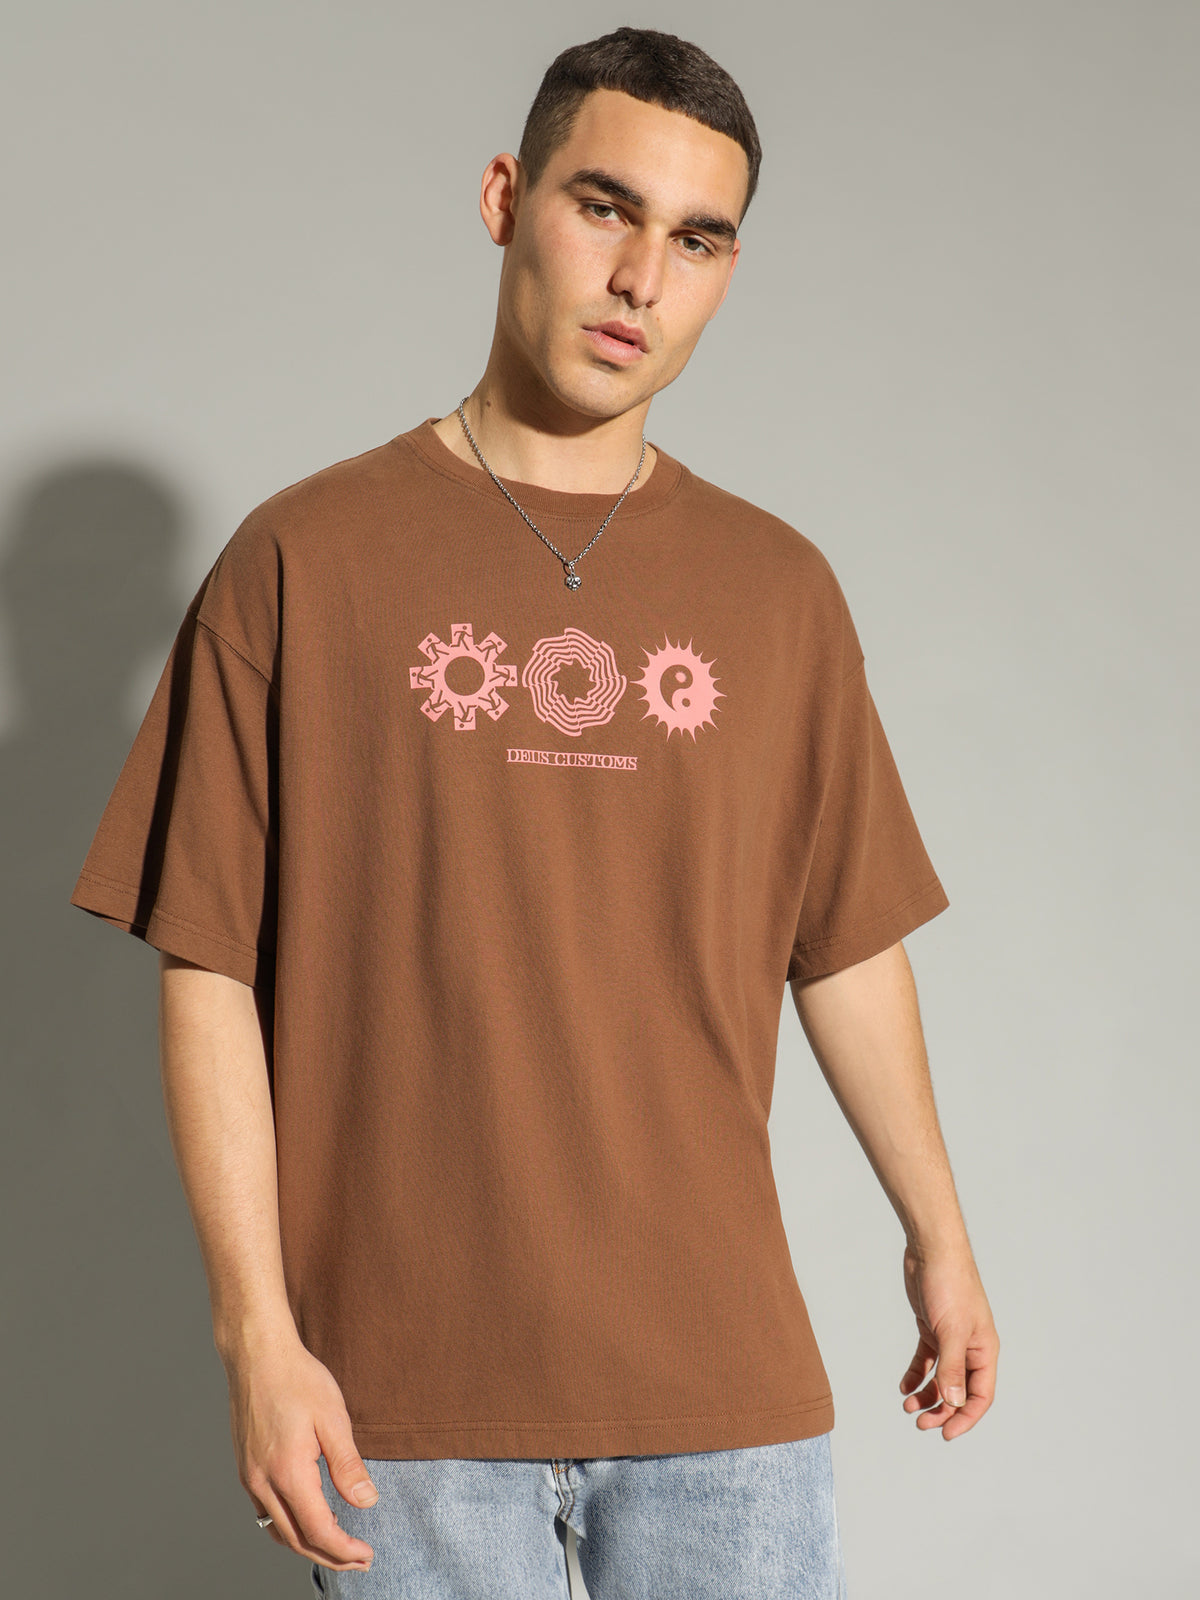 Garden T-Shirt in Brown